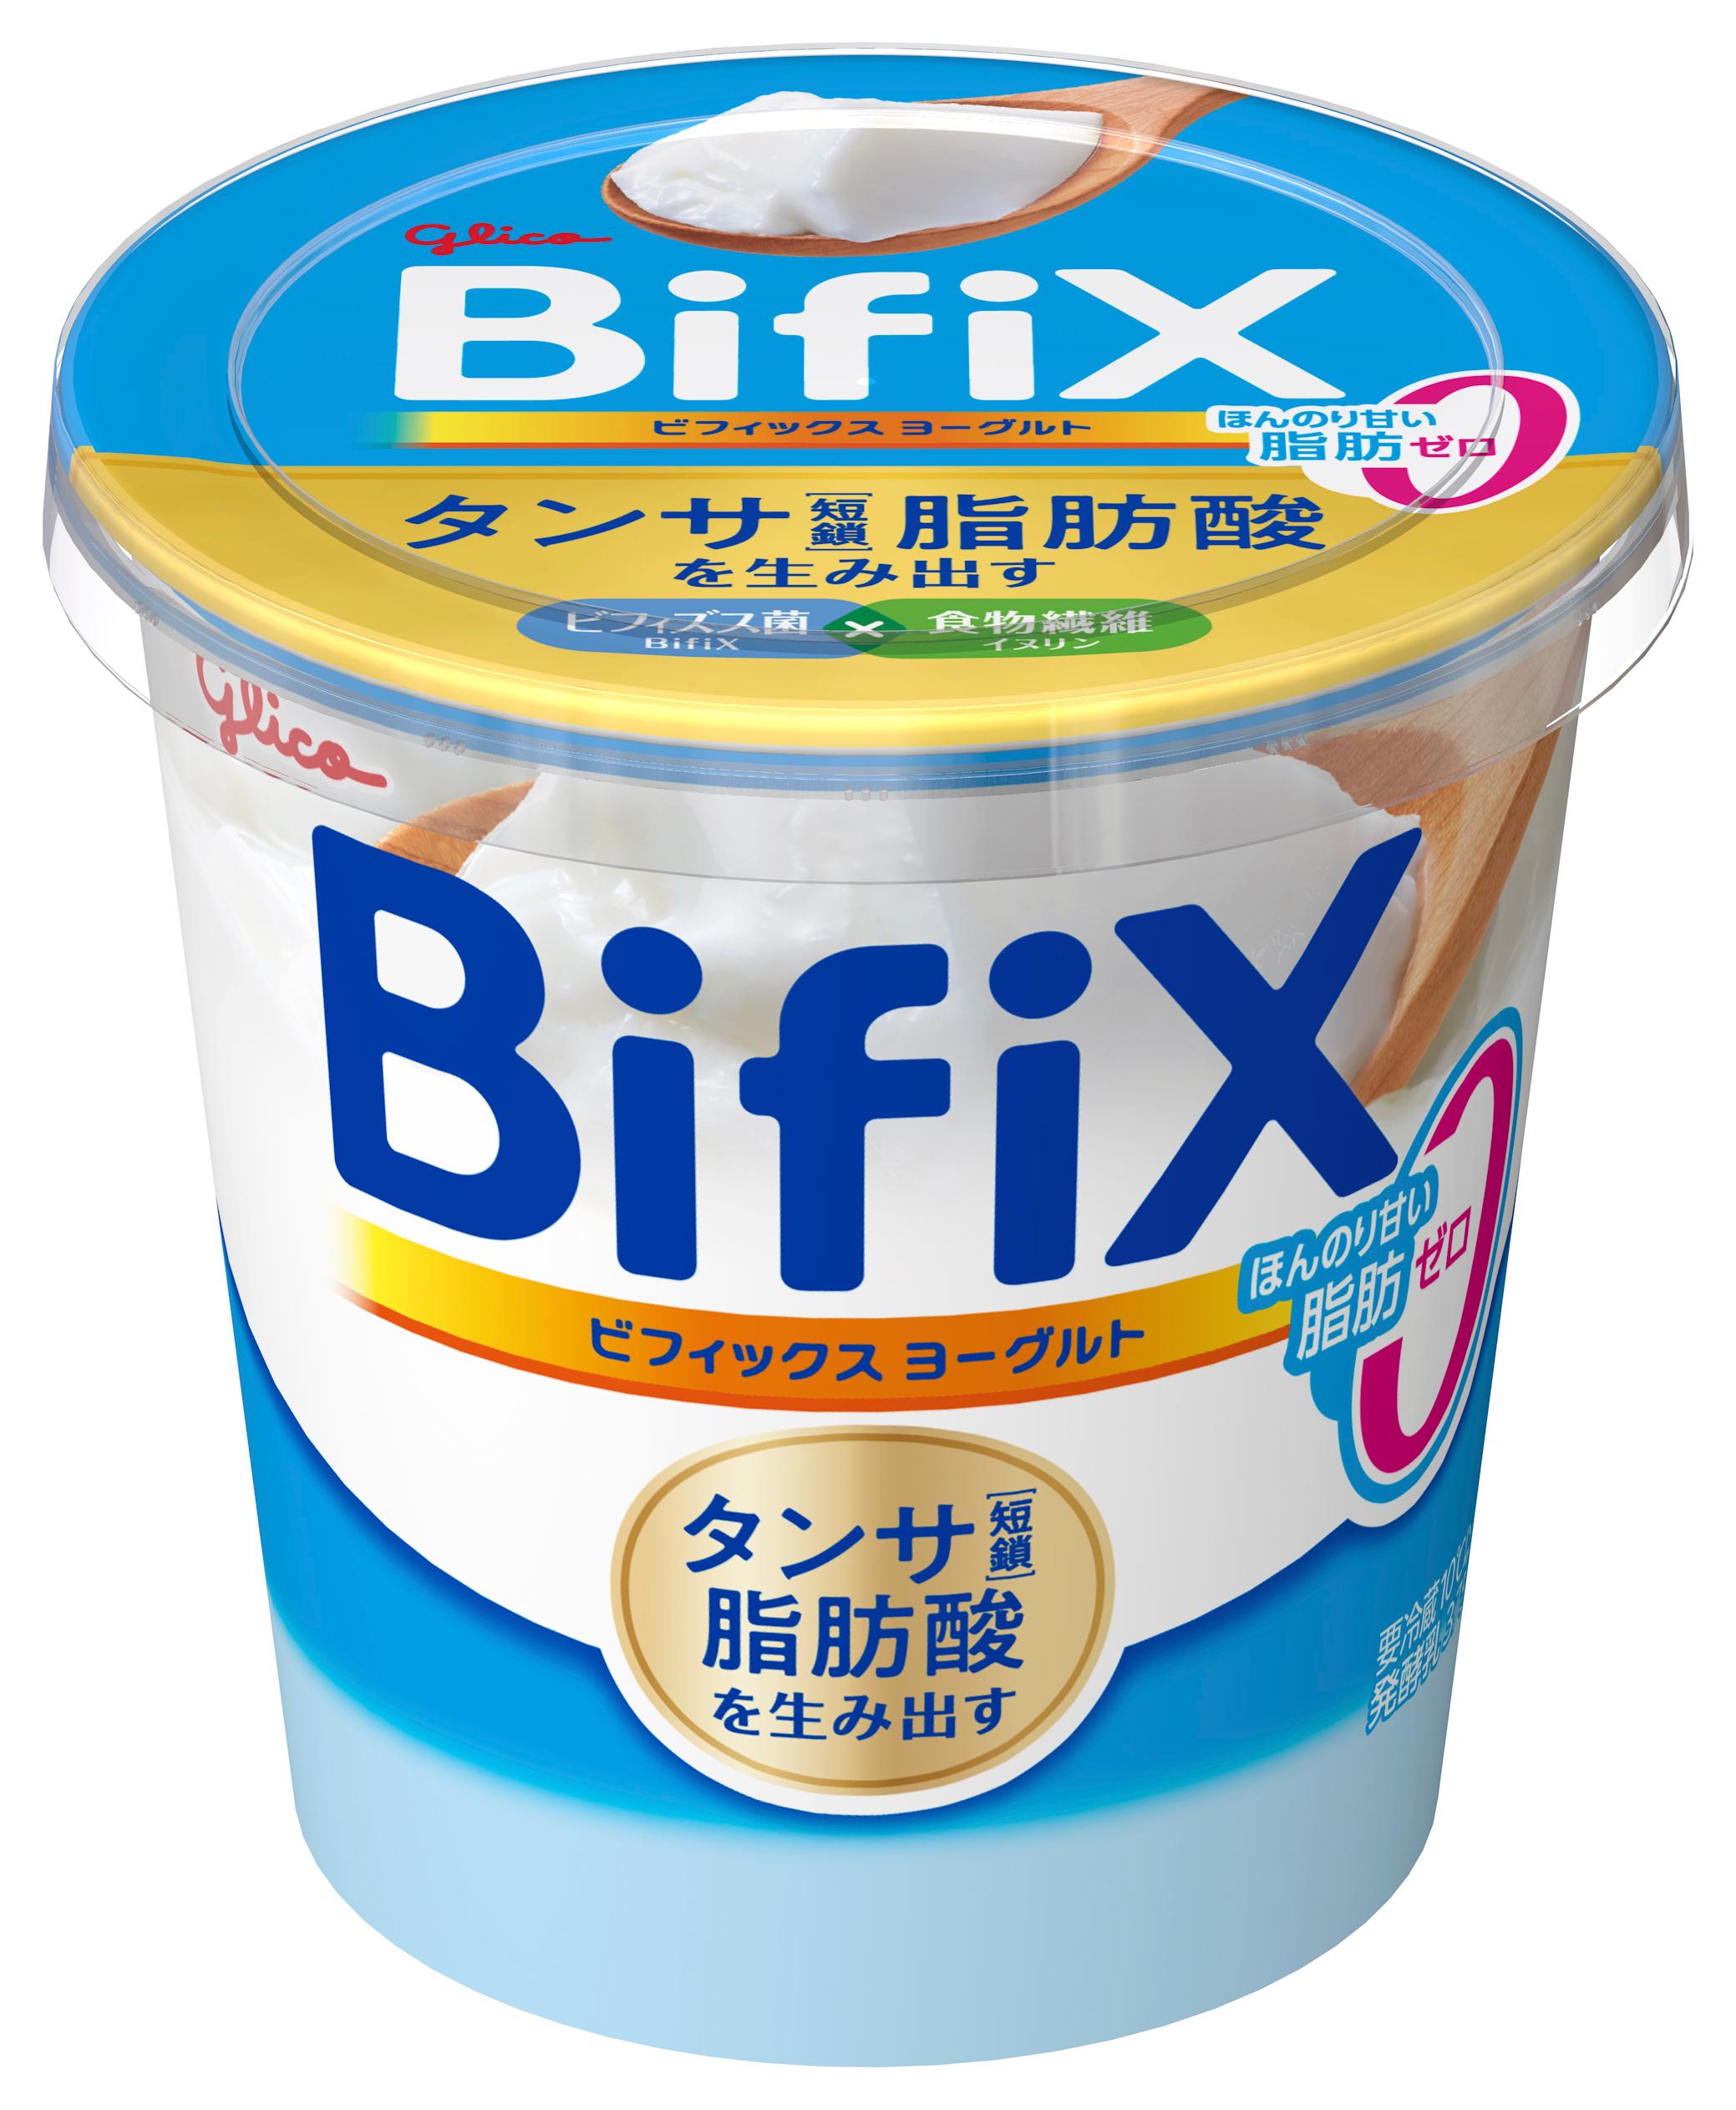 BifiXヨーグルト ほんのり甘い脂肪ゼロ 375g | 【公式】江崎グリコ(Glico)